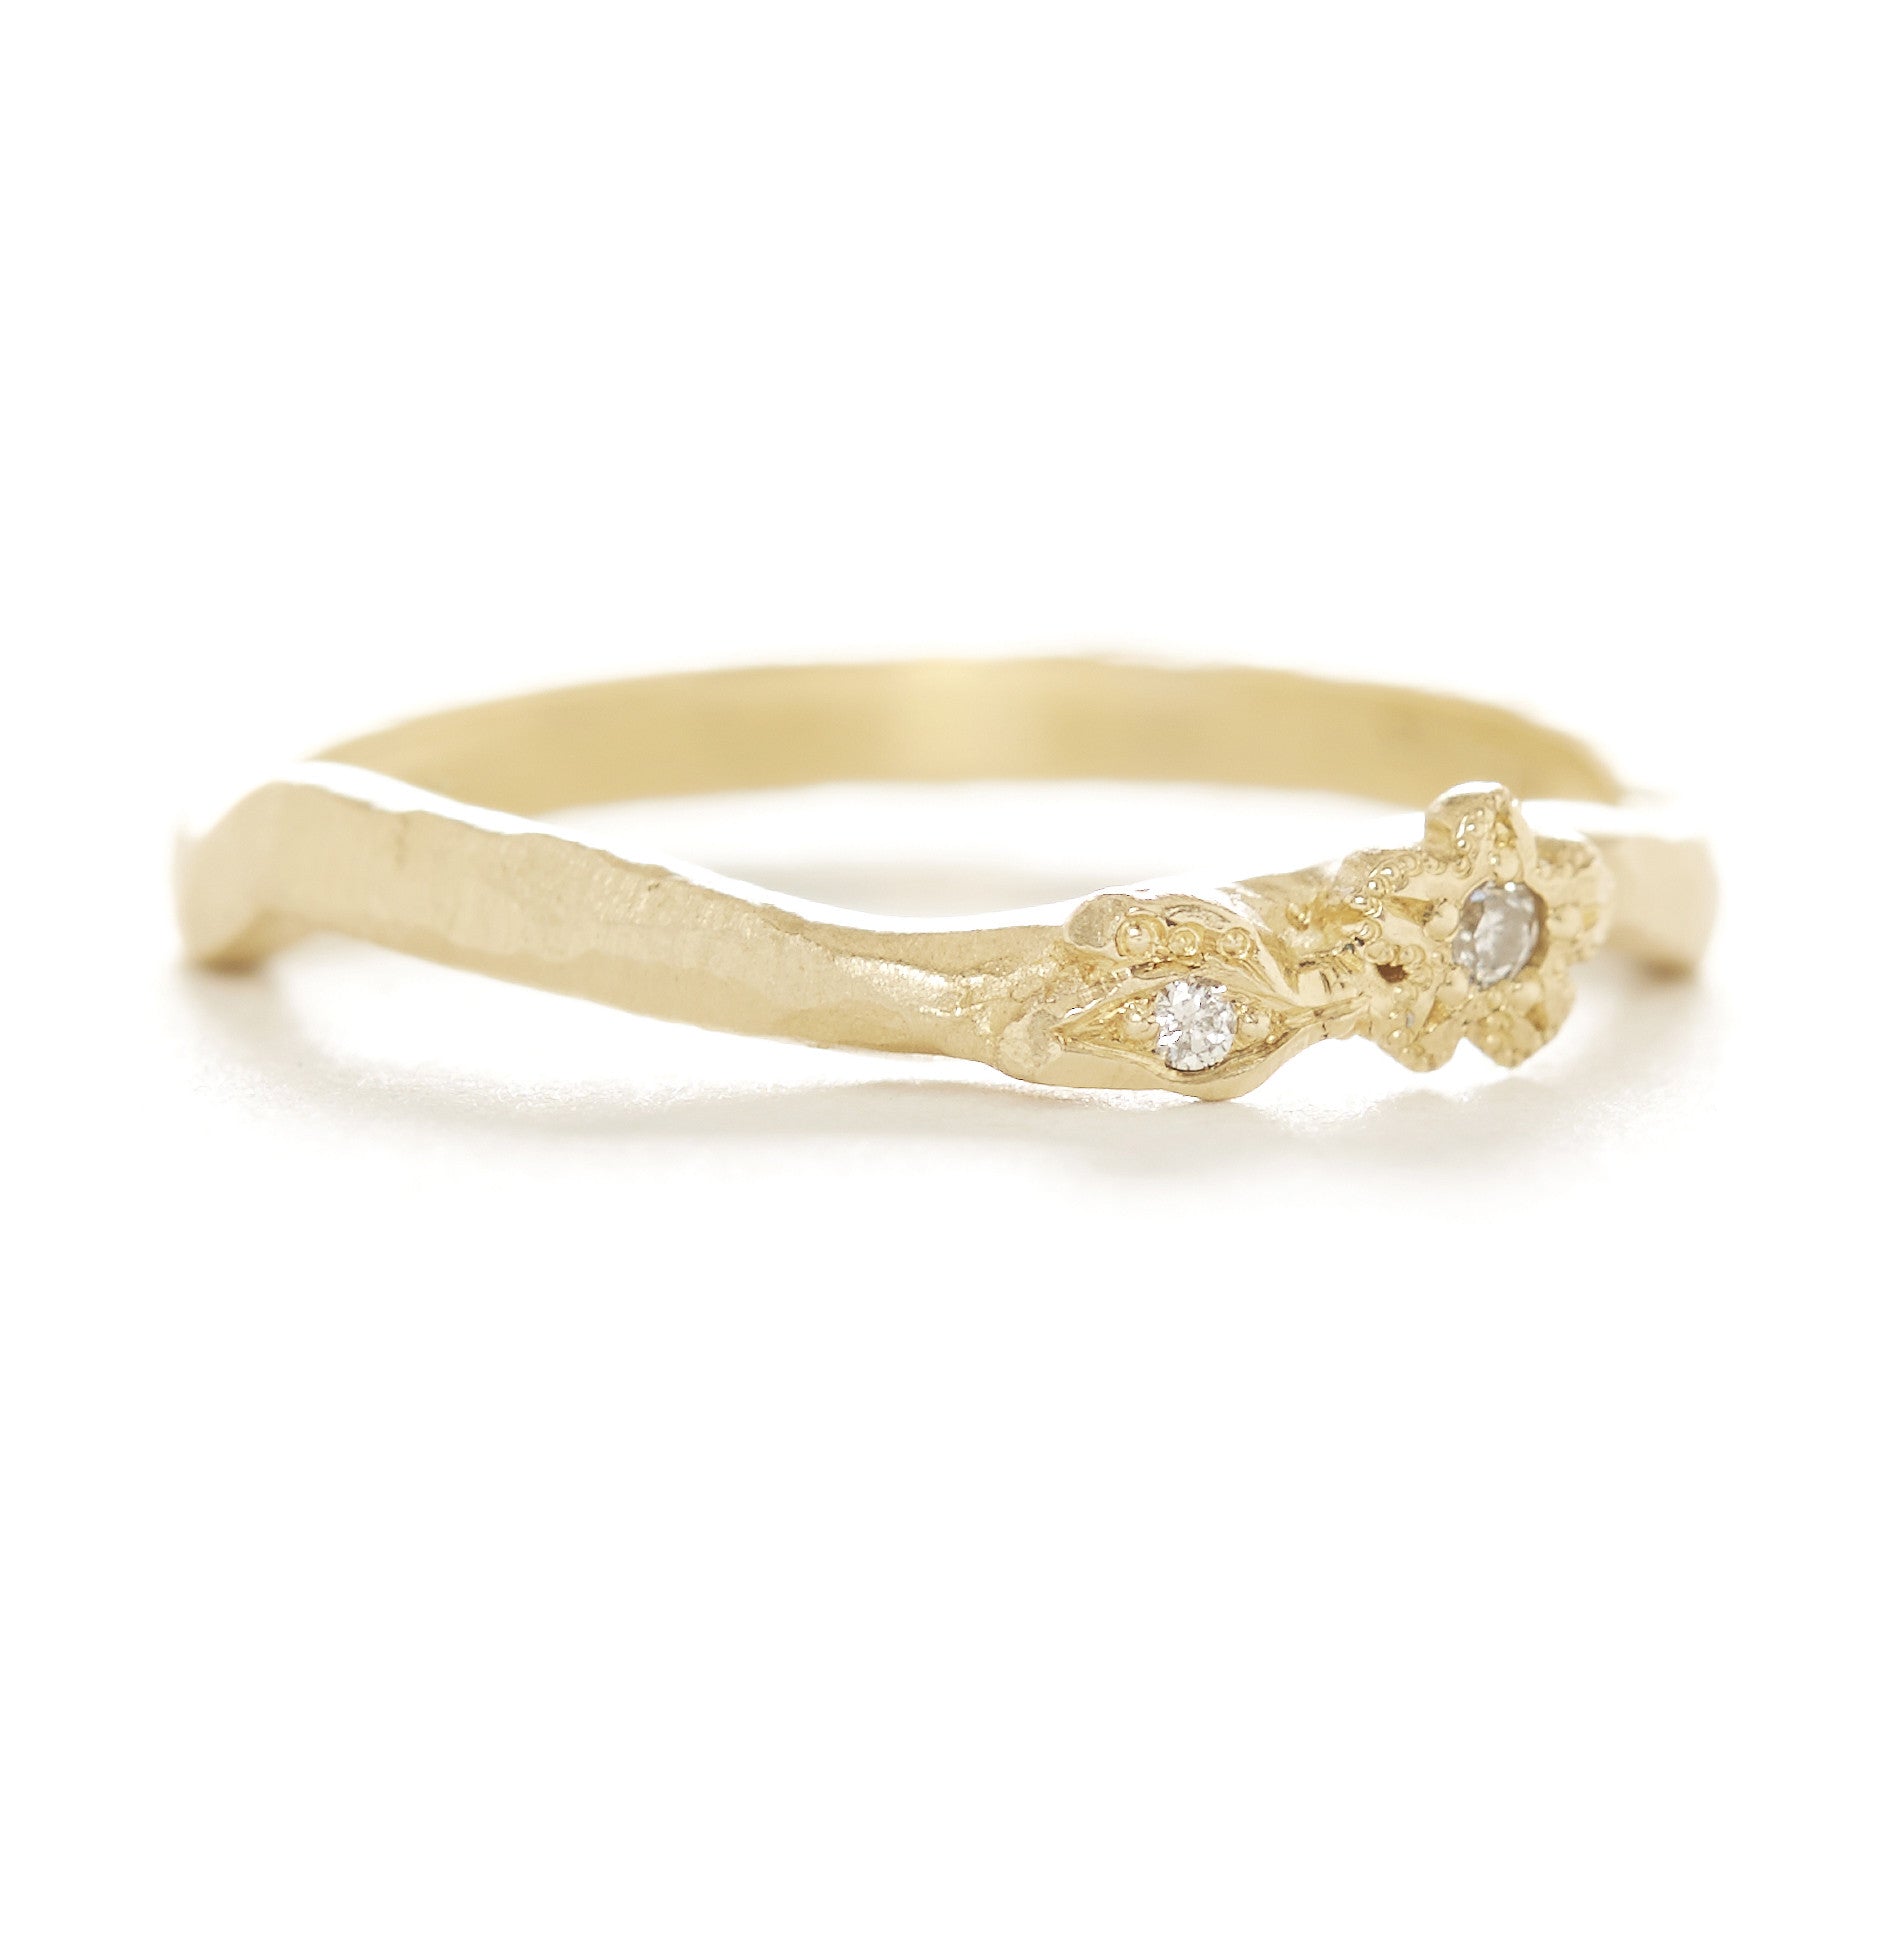 Oak leaves wedding band, ring for her, option 2 | Eden Garden Jewelry™